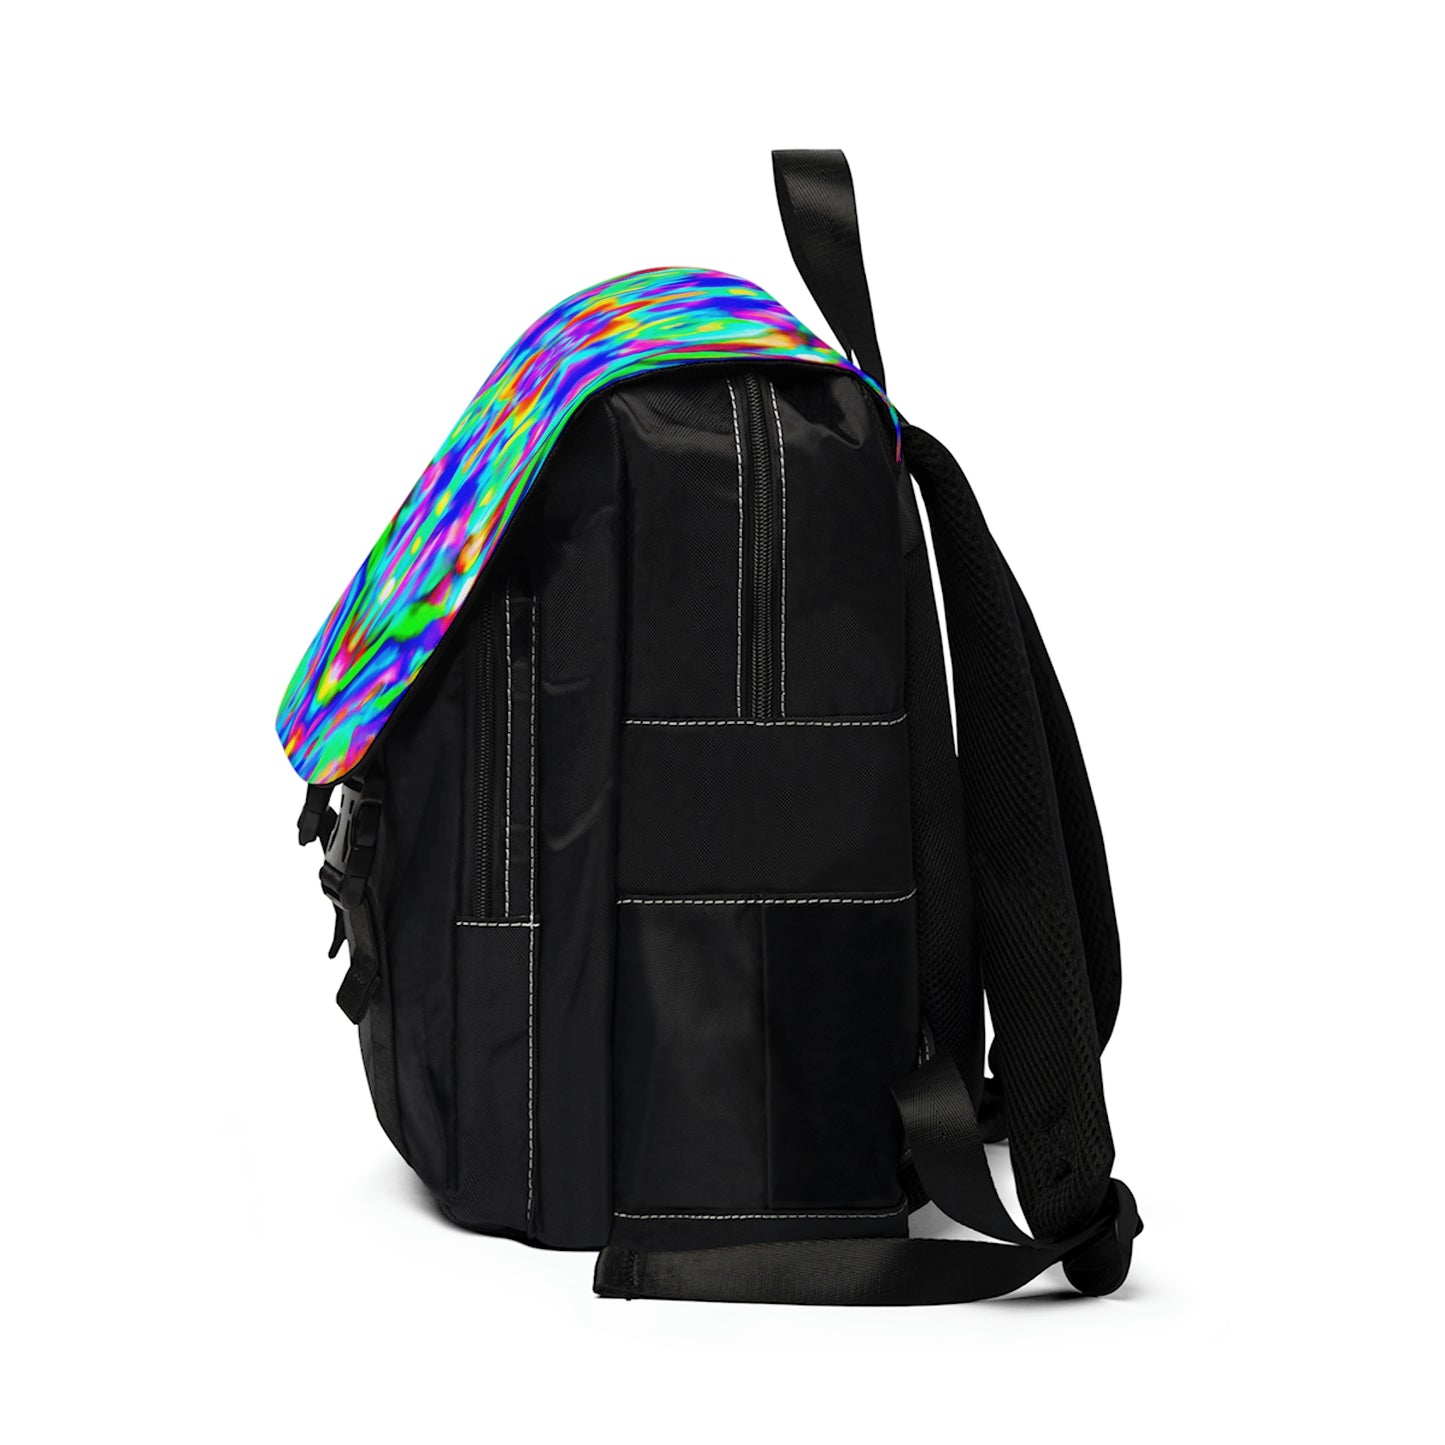 .

Genevieve Luxe - Psychedelic Shoulder Travel Backpack Bag